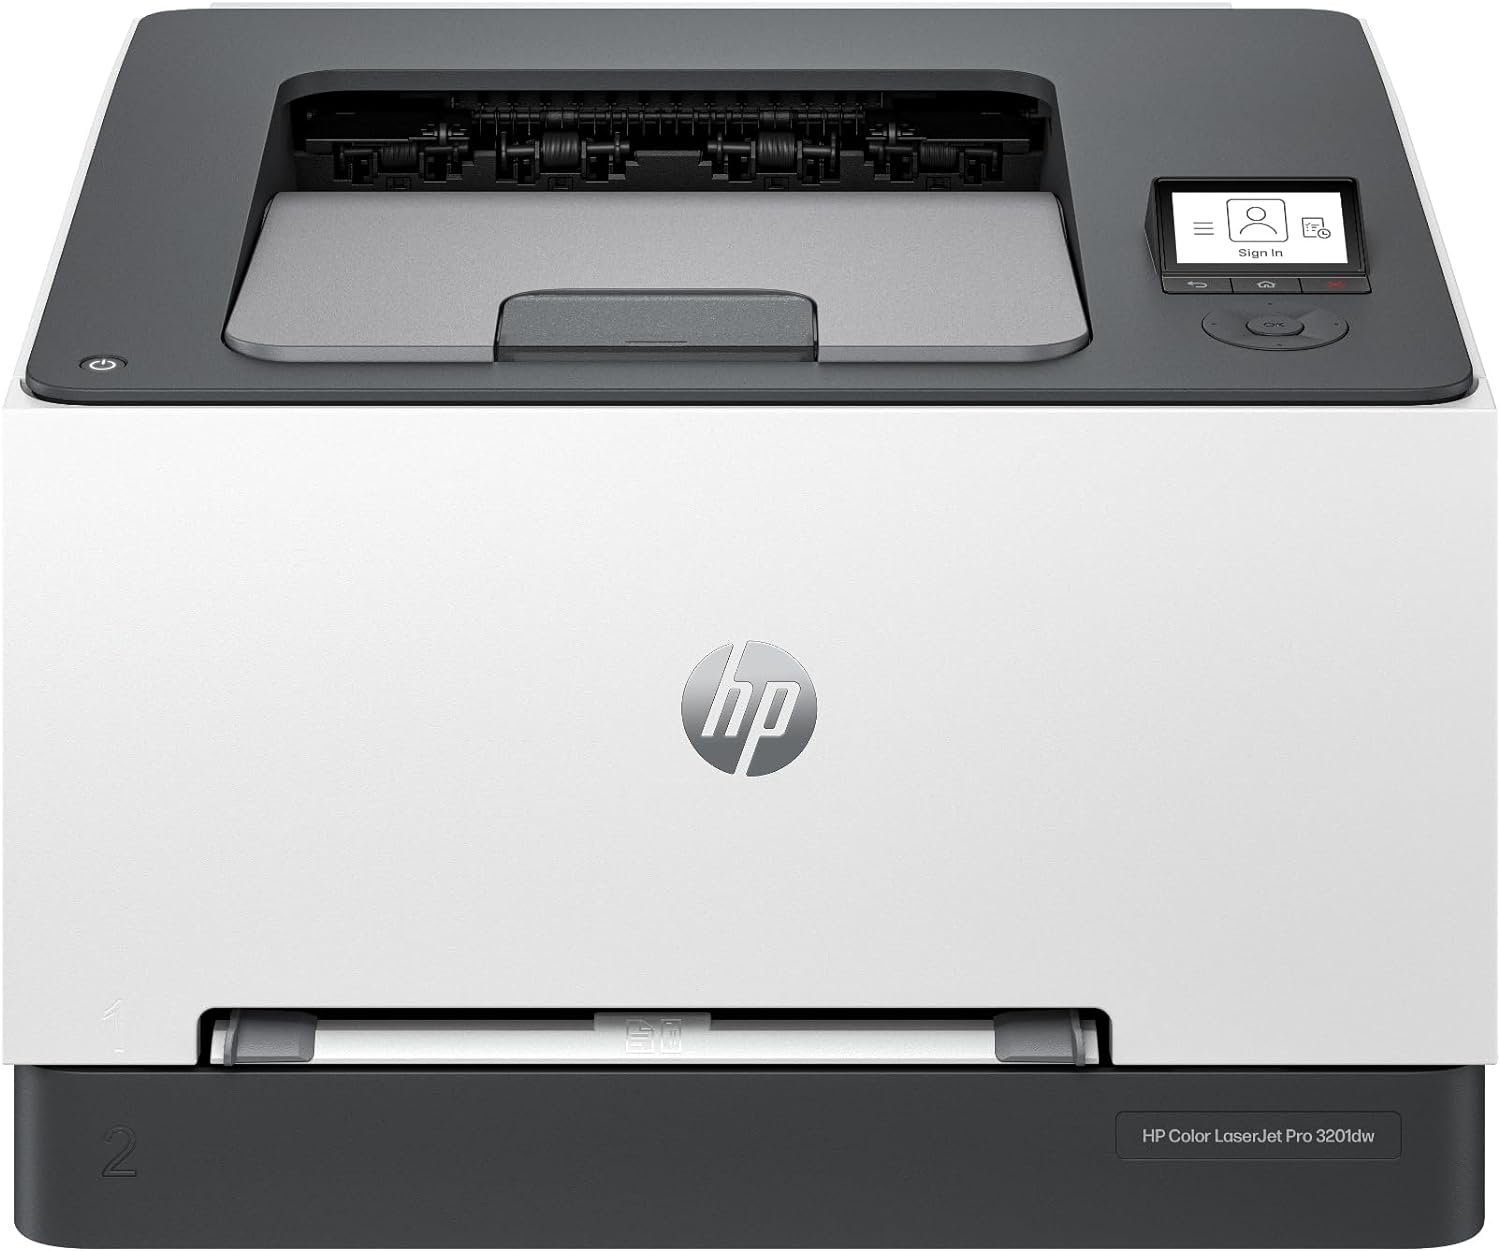 HP Color Laserjet Pro 3201dw Wireless Color Laser Printer